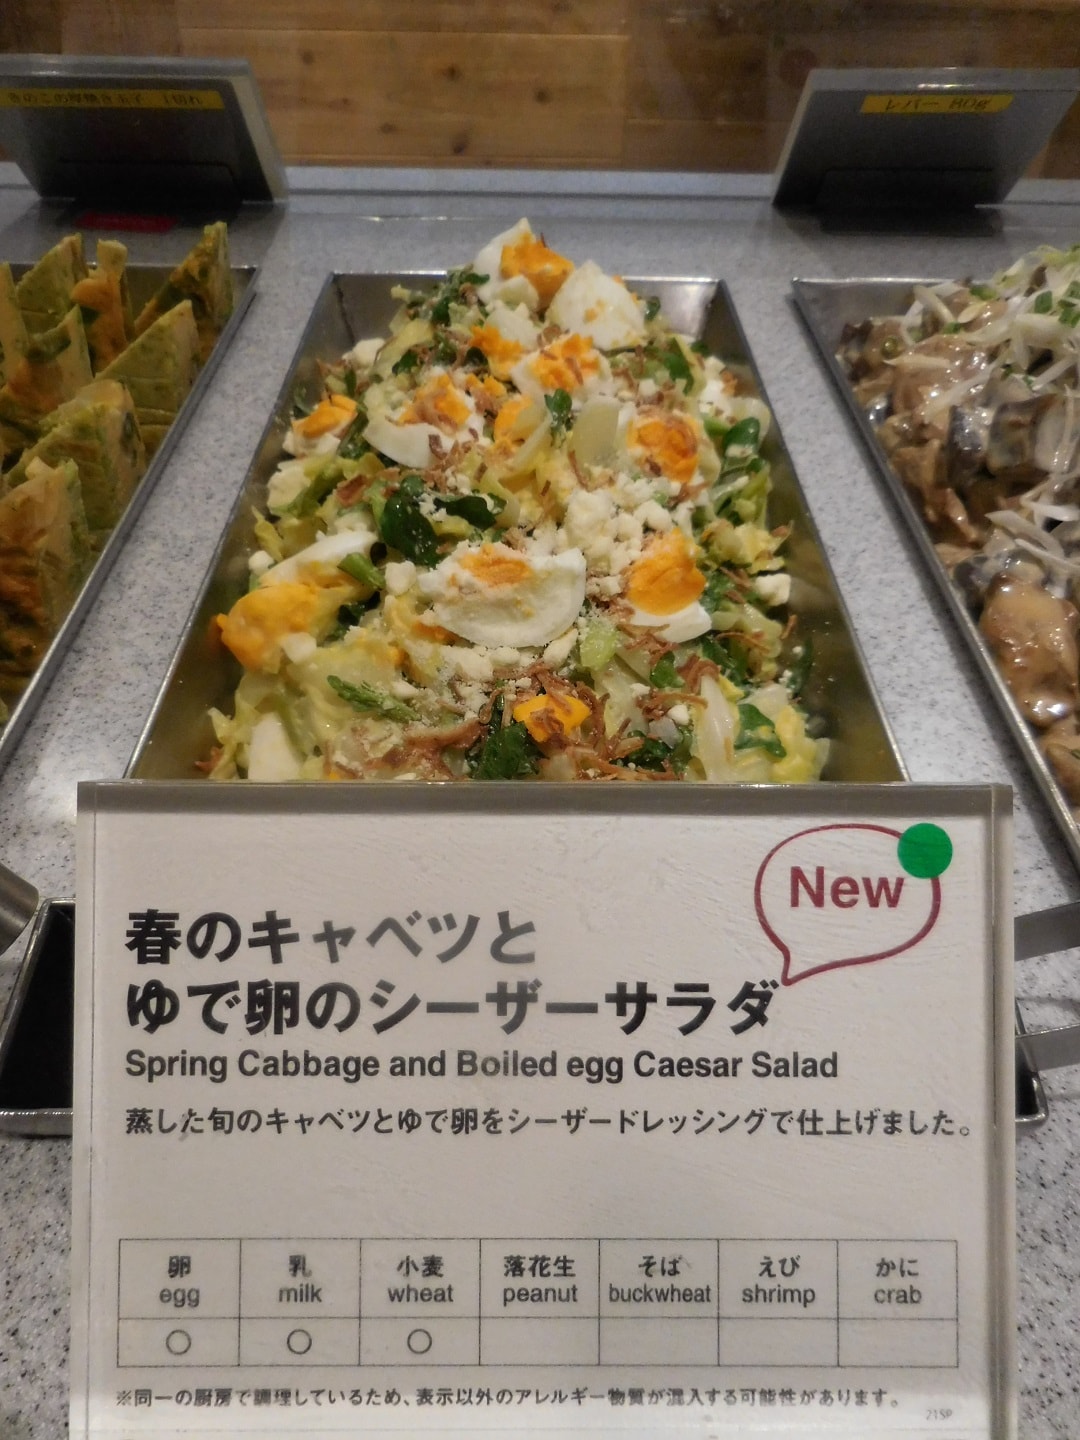 Cafe Meal Muji渋谷西武 春の新メニュー 春のキャベツとゆで卵のシーザーサラダ 無印良品